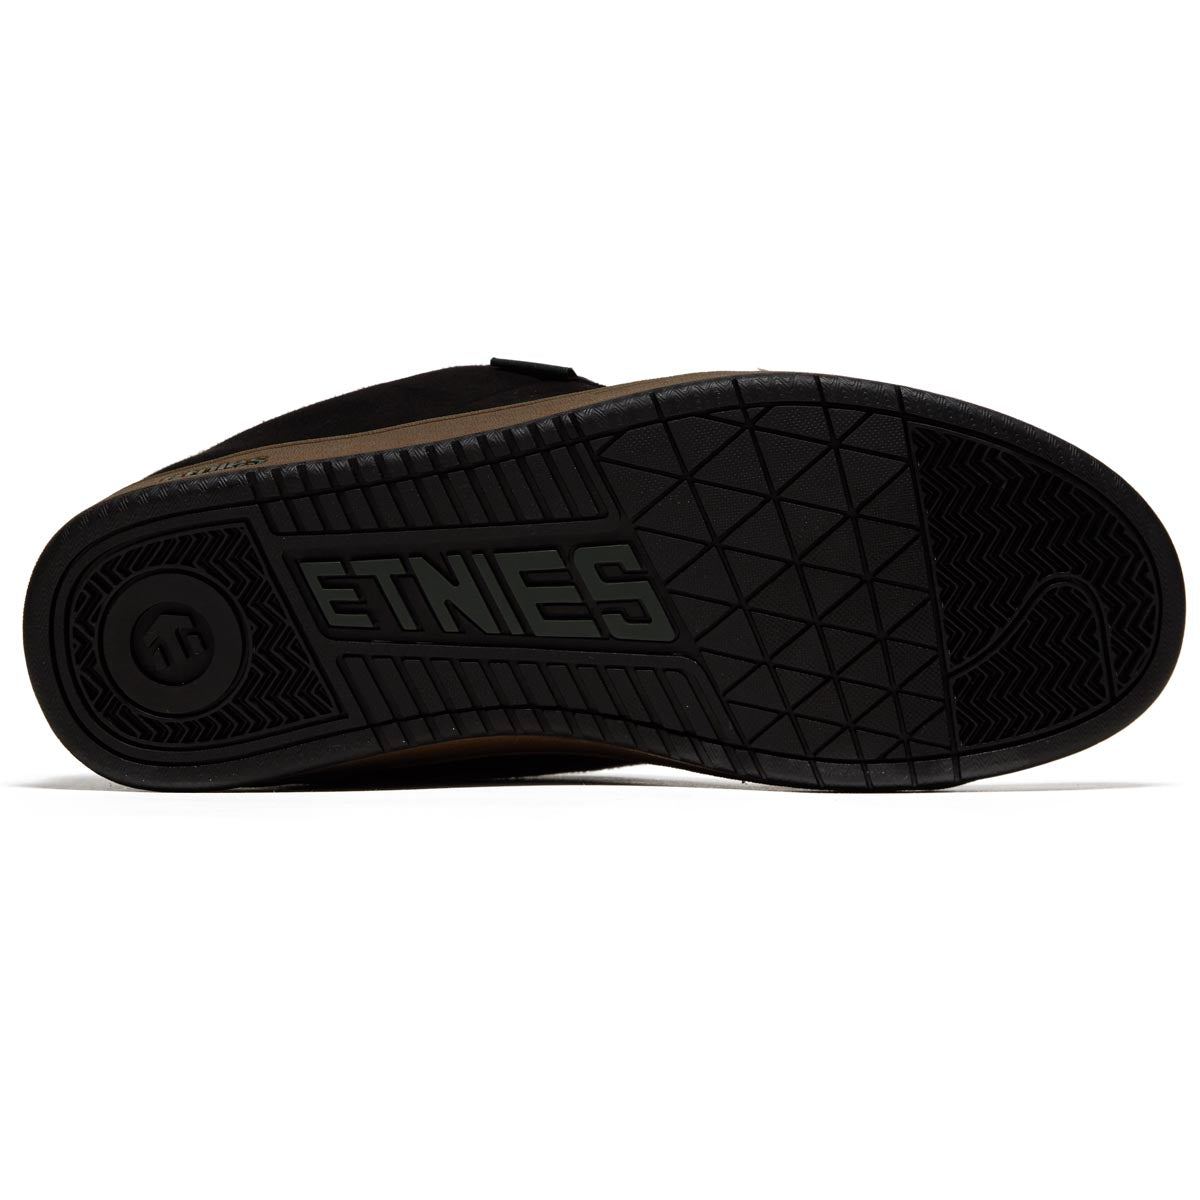 Etnies Kingpin Shoes - Black/Green/Gum image 4